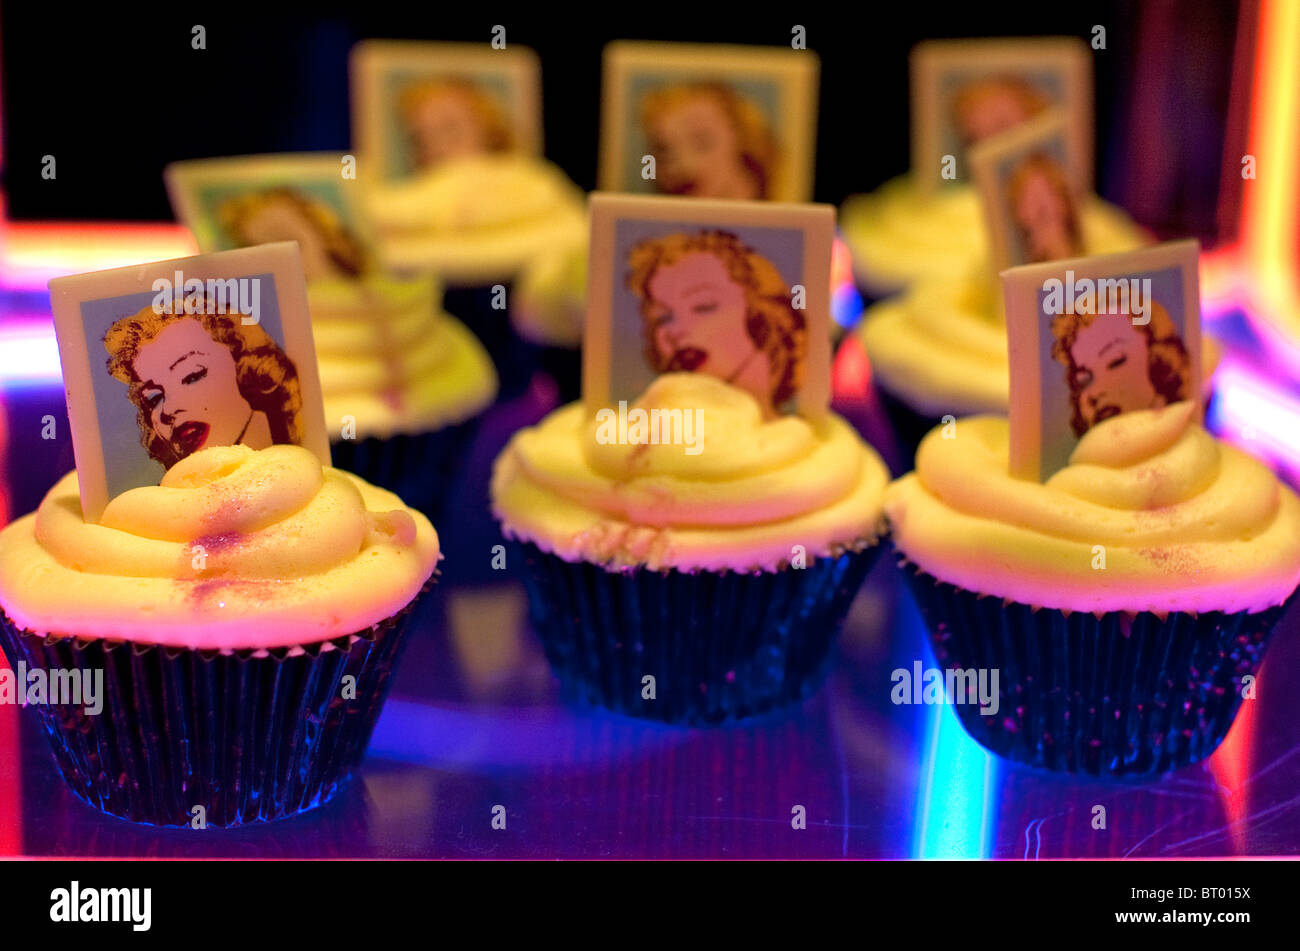 Marilyn Monroe cupcakes by Patrick Cox in Soho shop, London Stock Photo